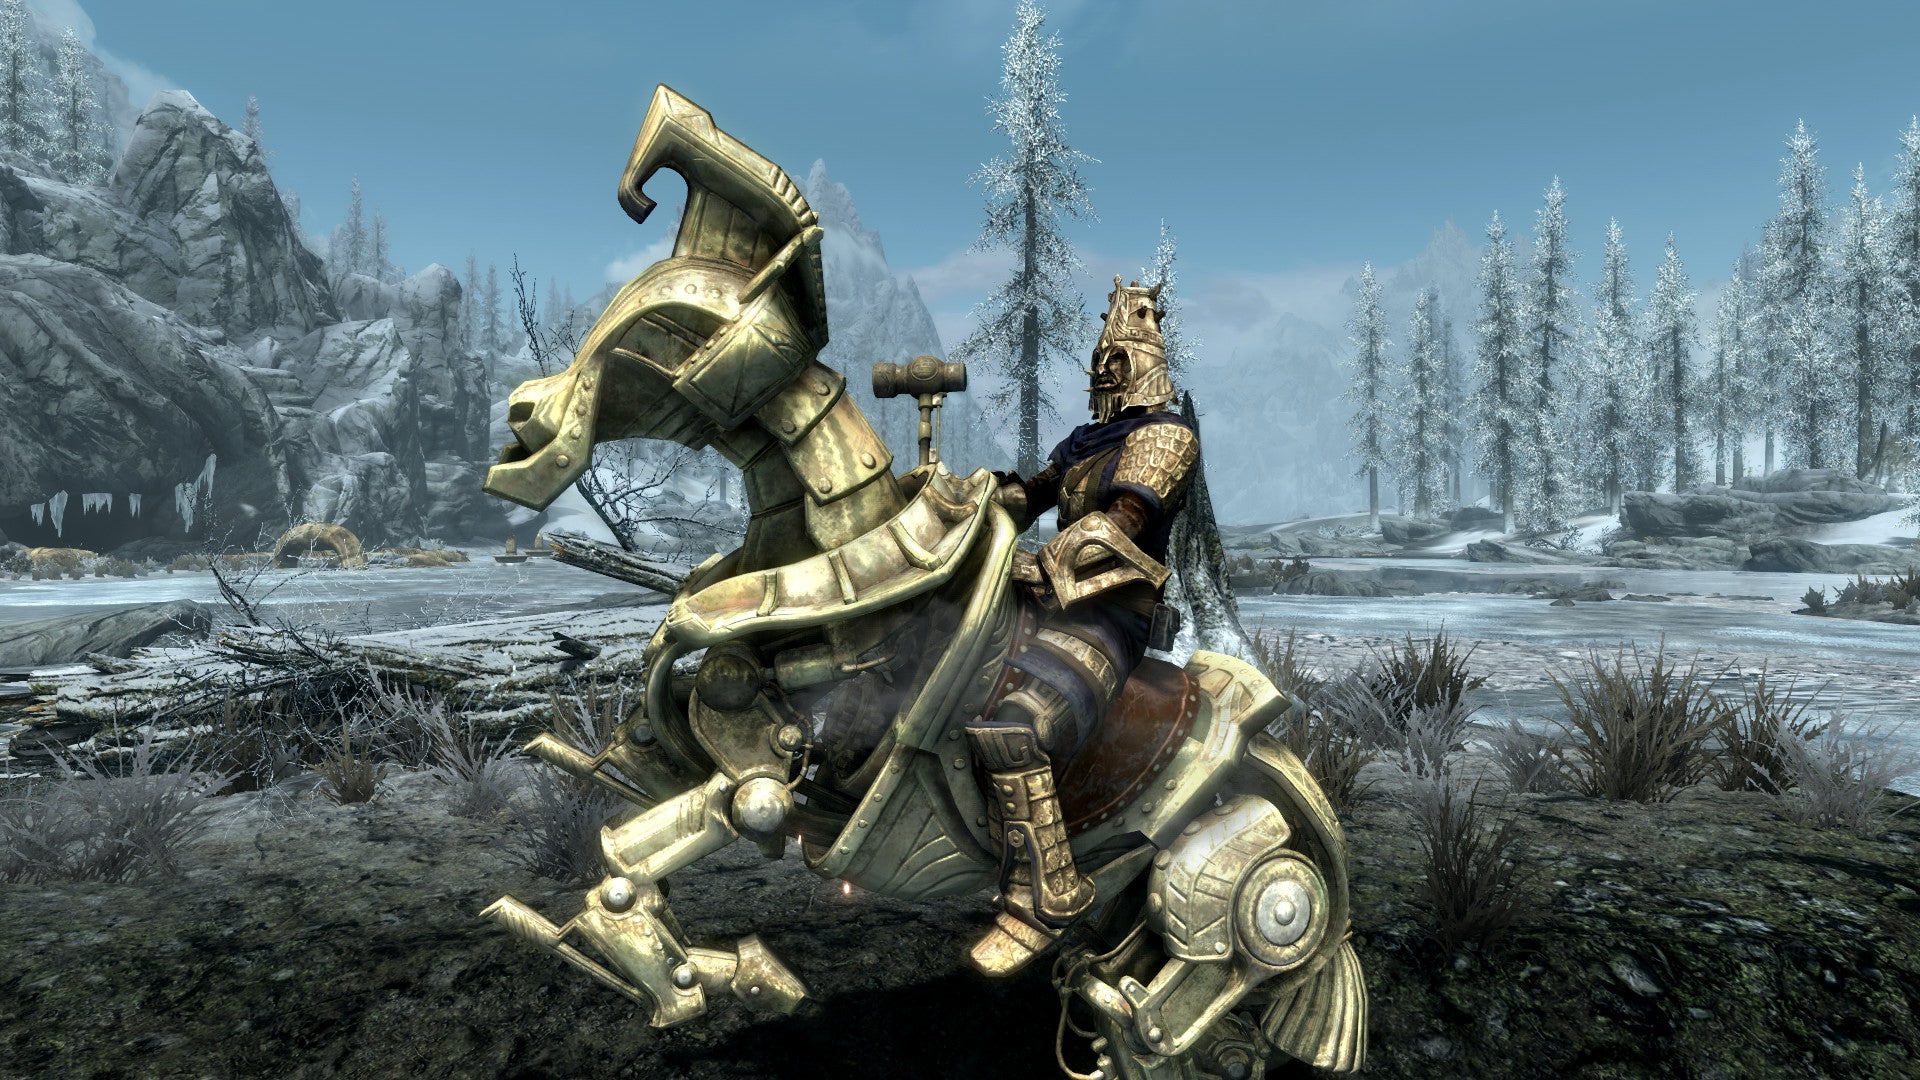 Riding a mechanical horse in a The Elder Scrolls V: Skyrim Anniversary Edition screenshot.